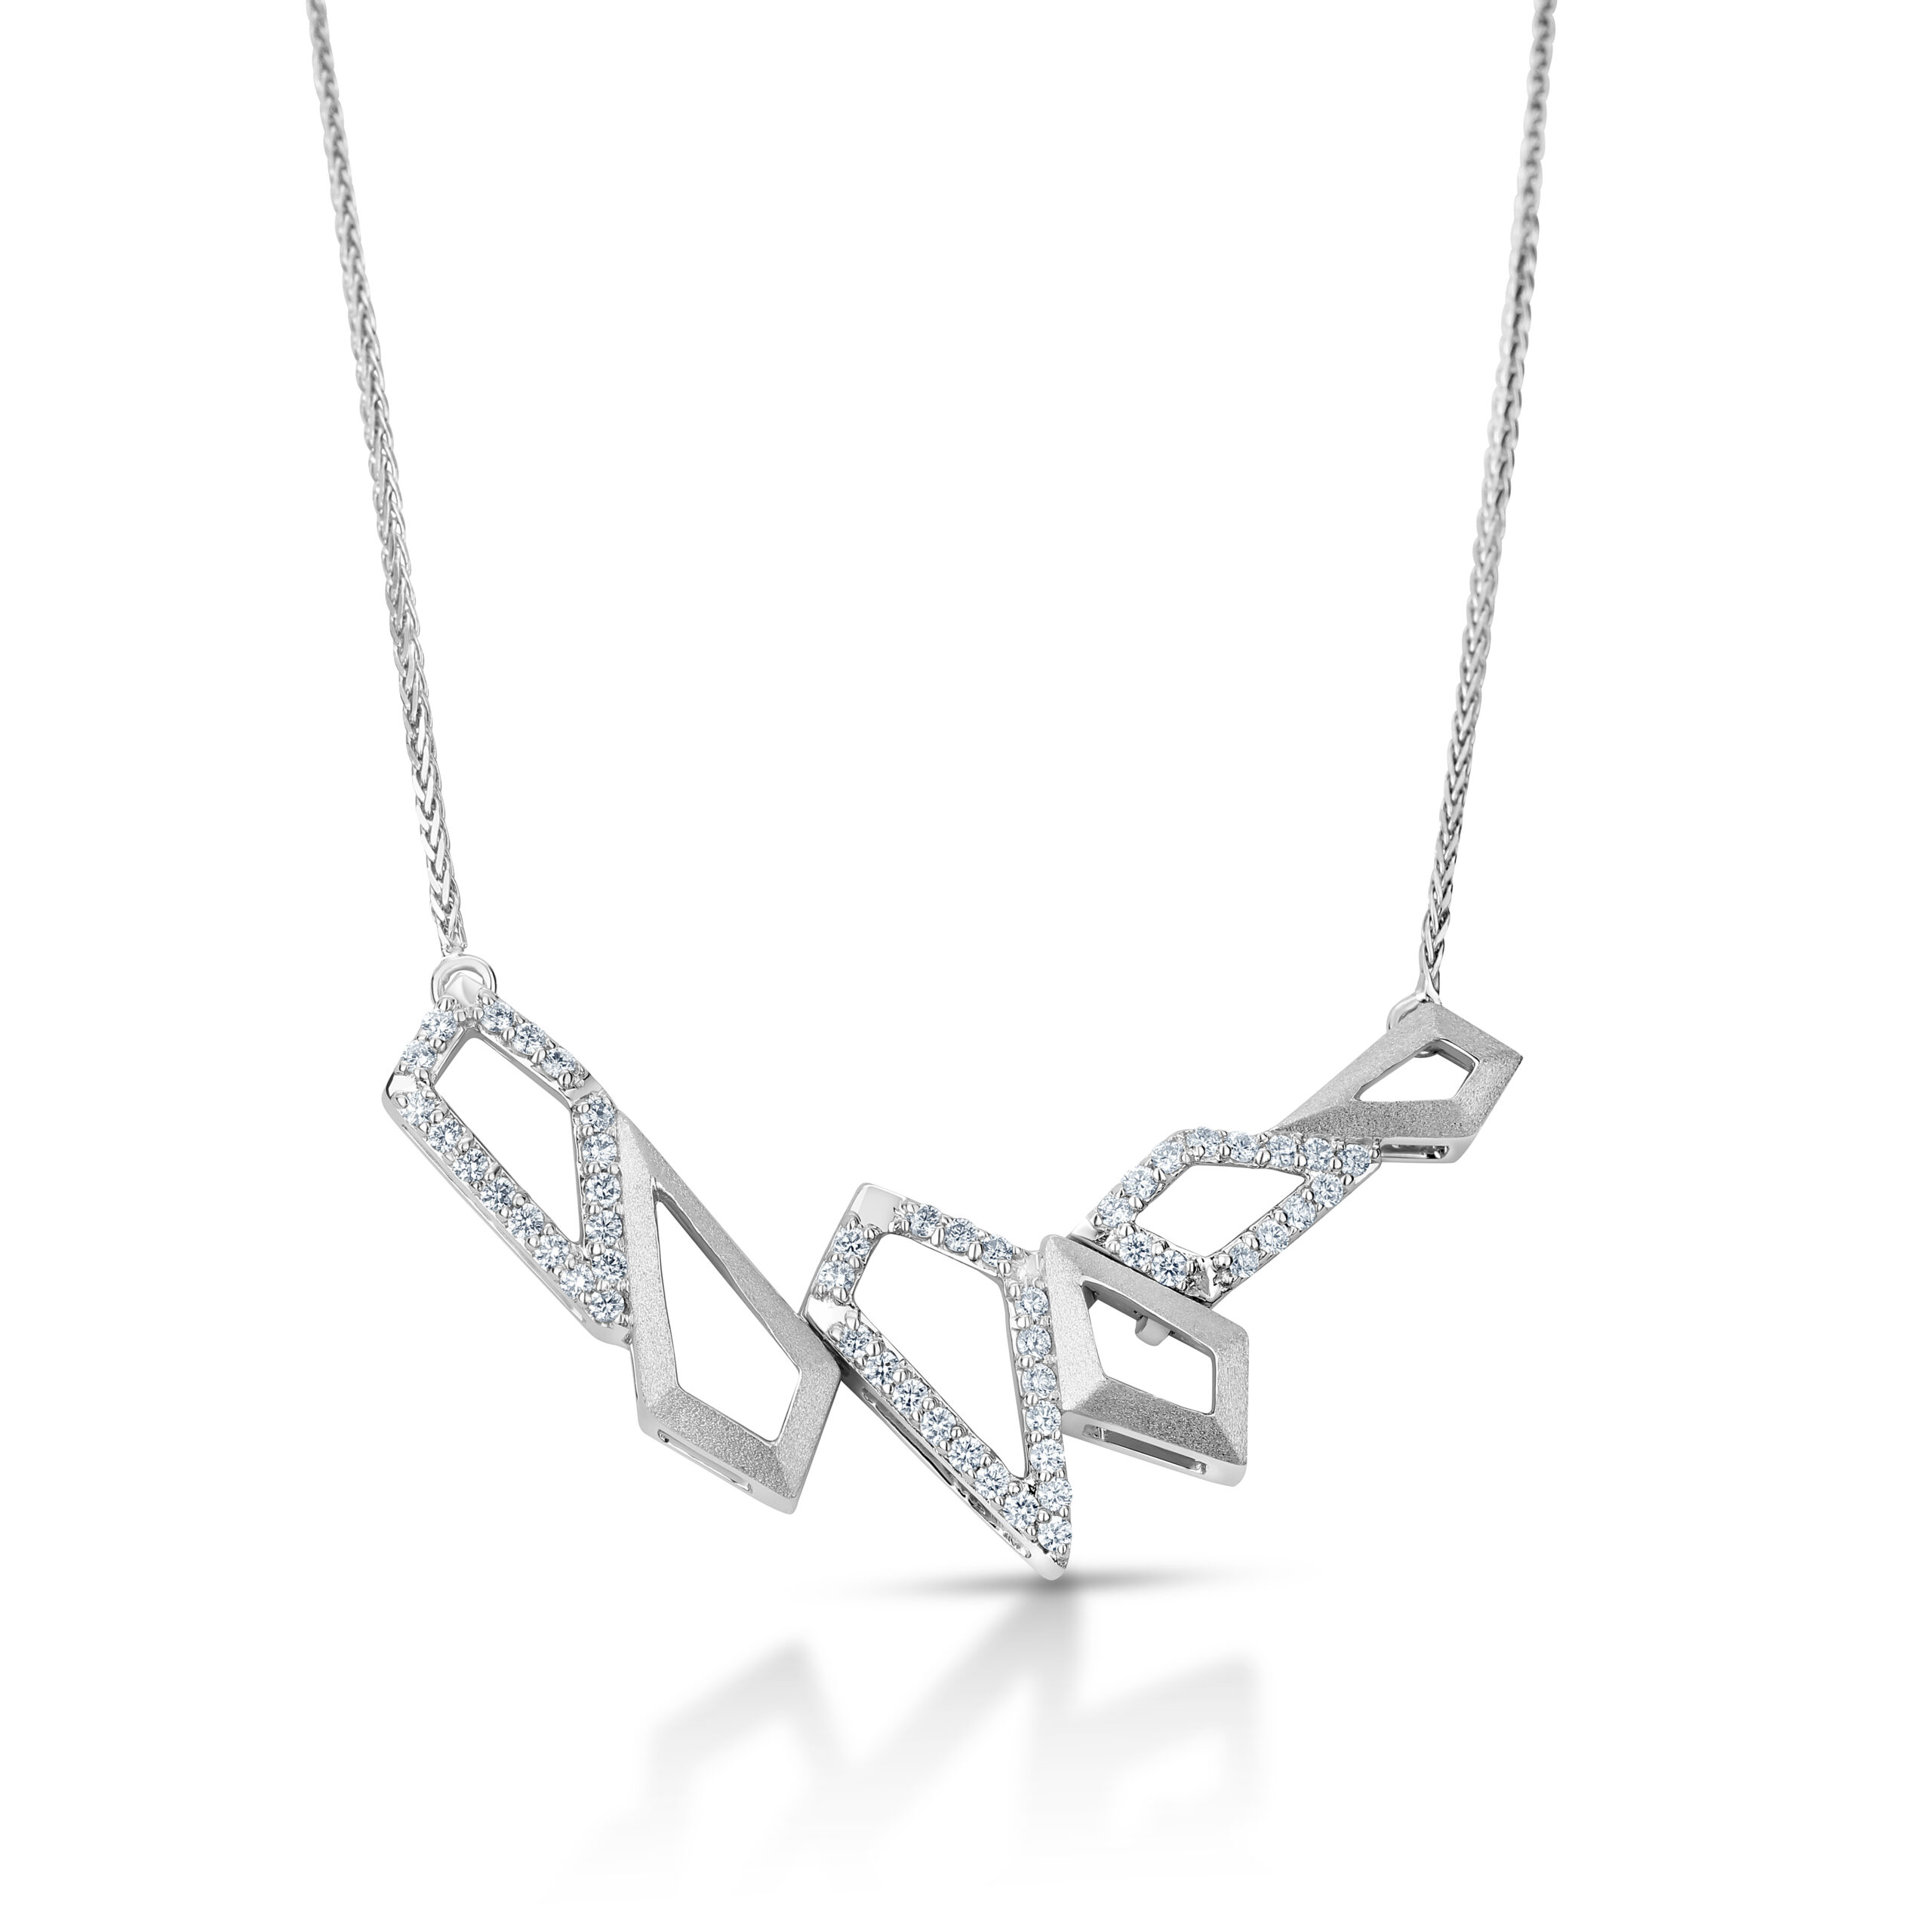 Necklace by Platinum Evara (16)